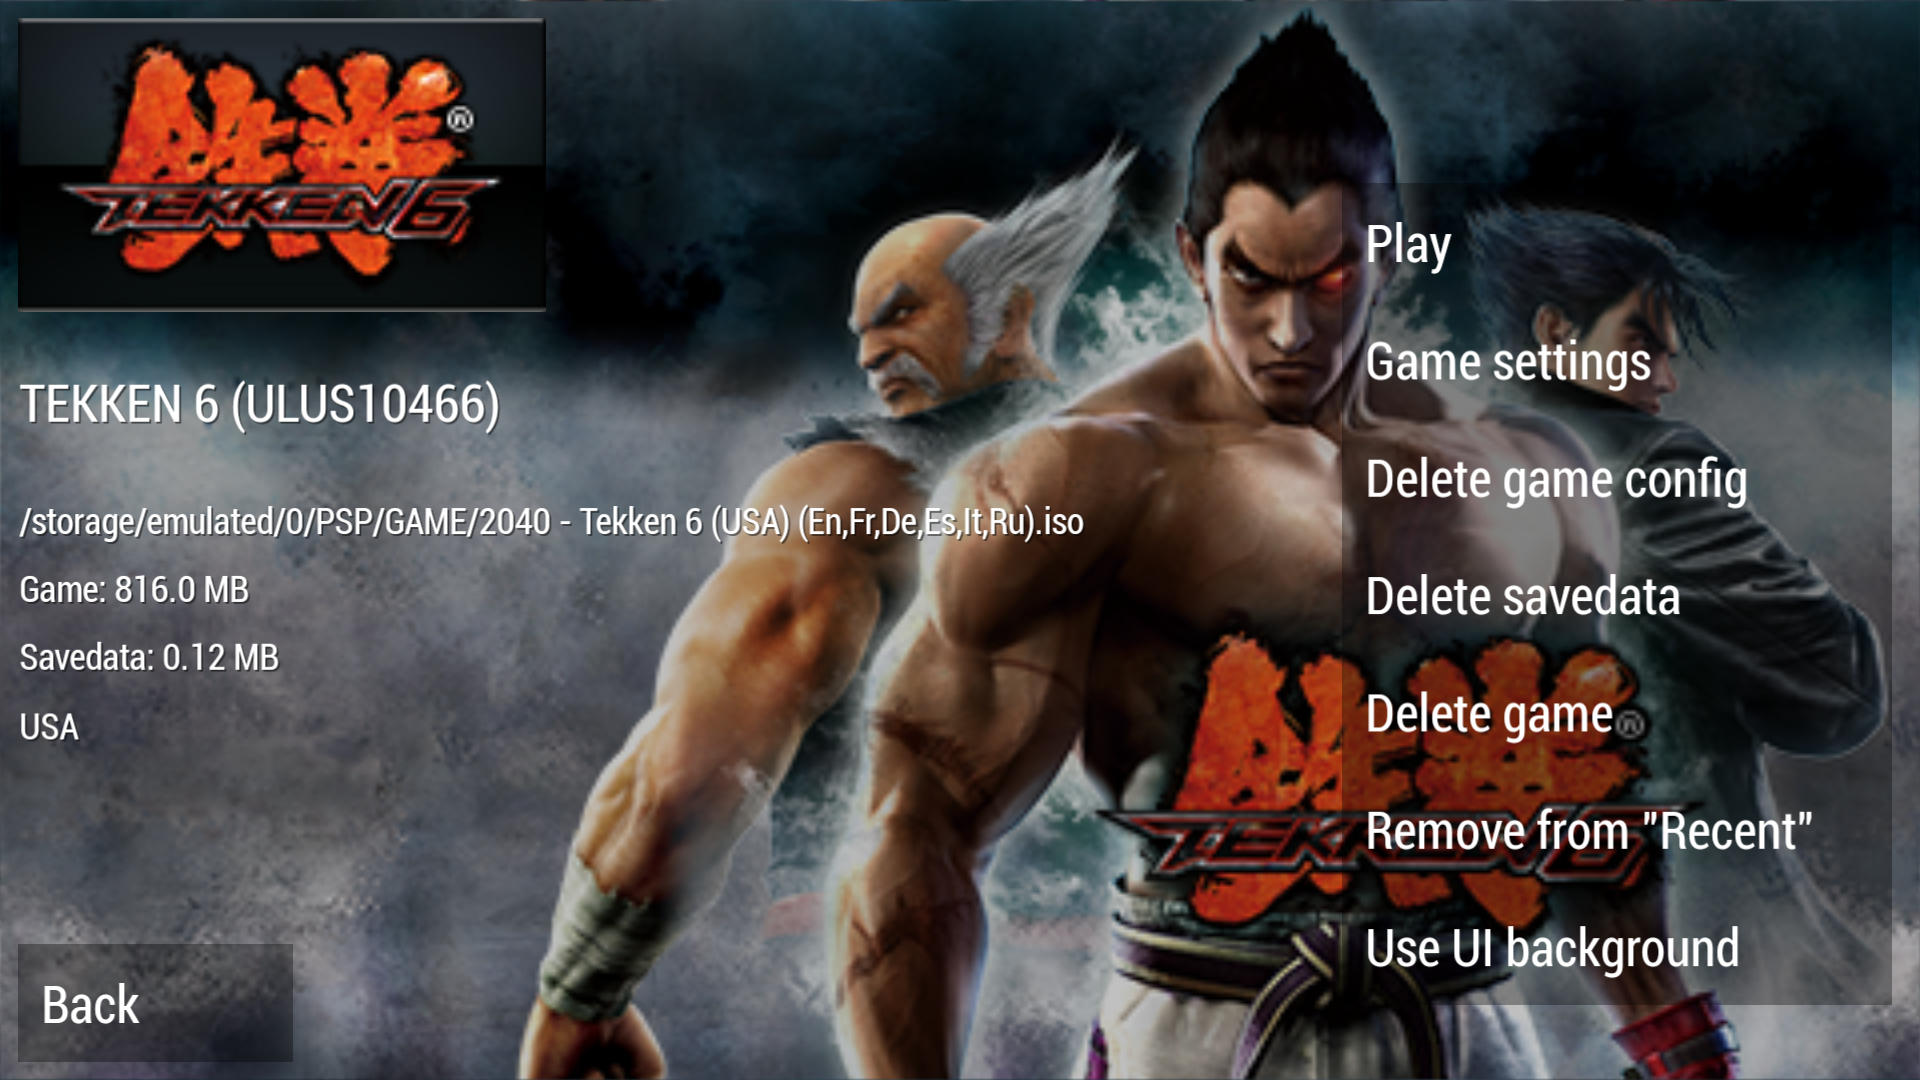 How To Download Tekken 6 For Ppsspp Emulator Pc